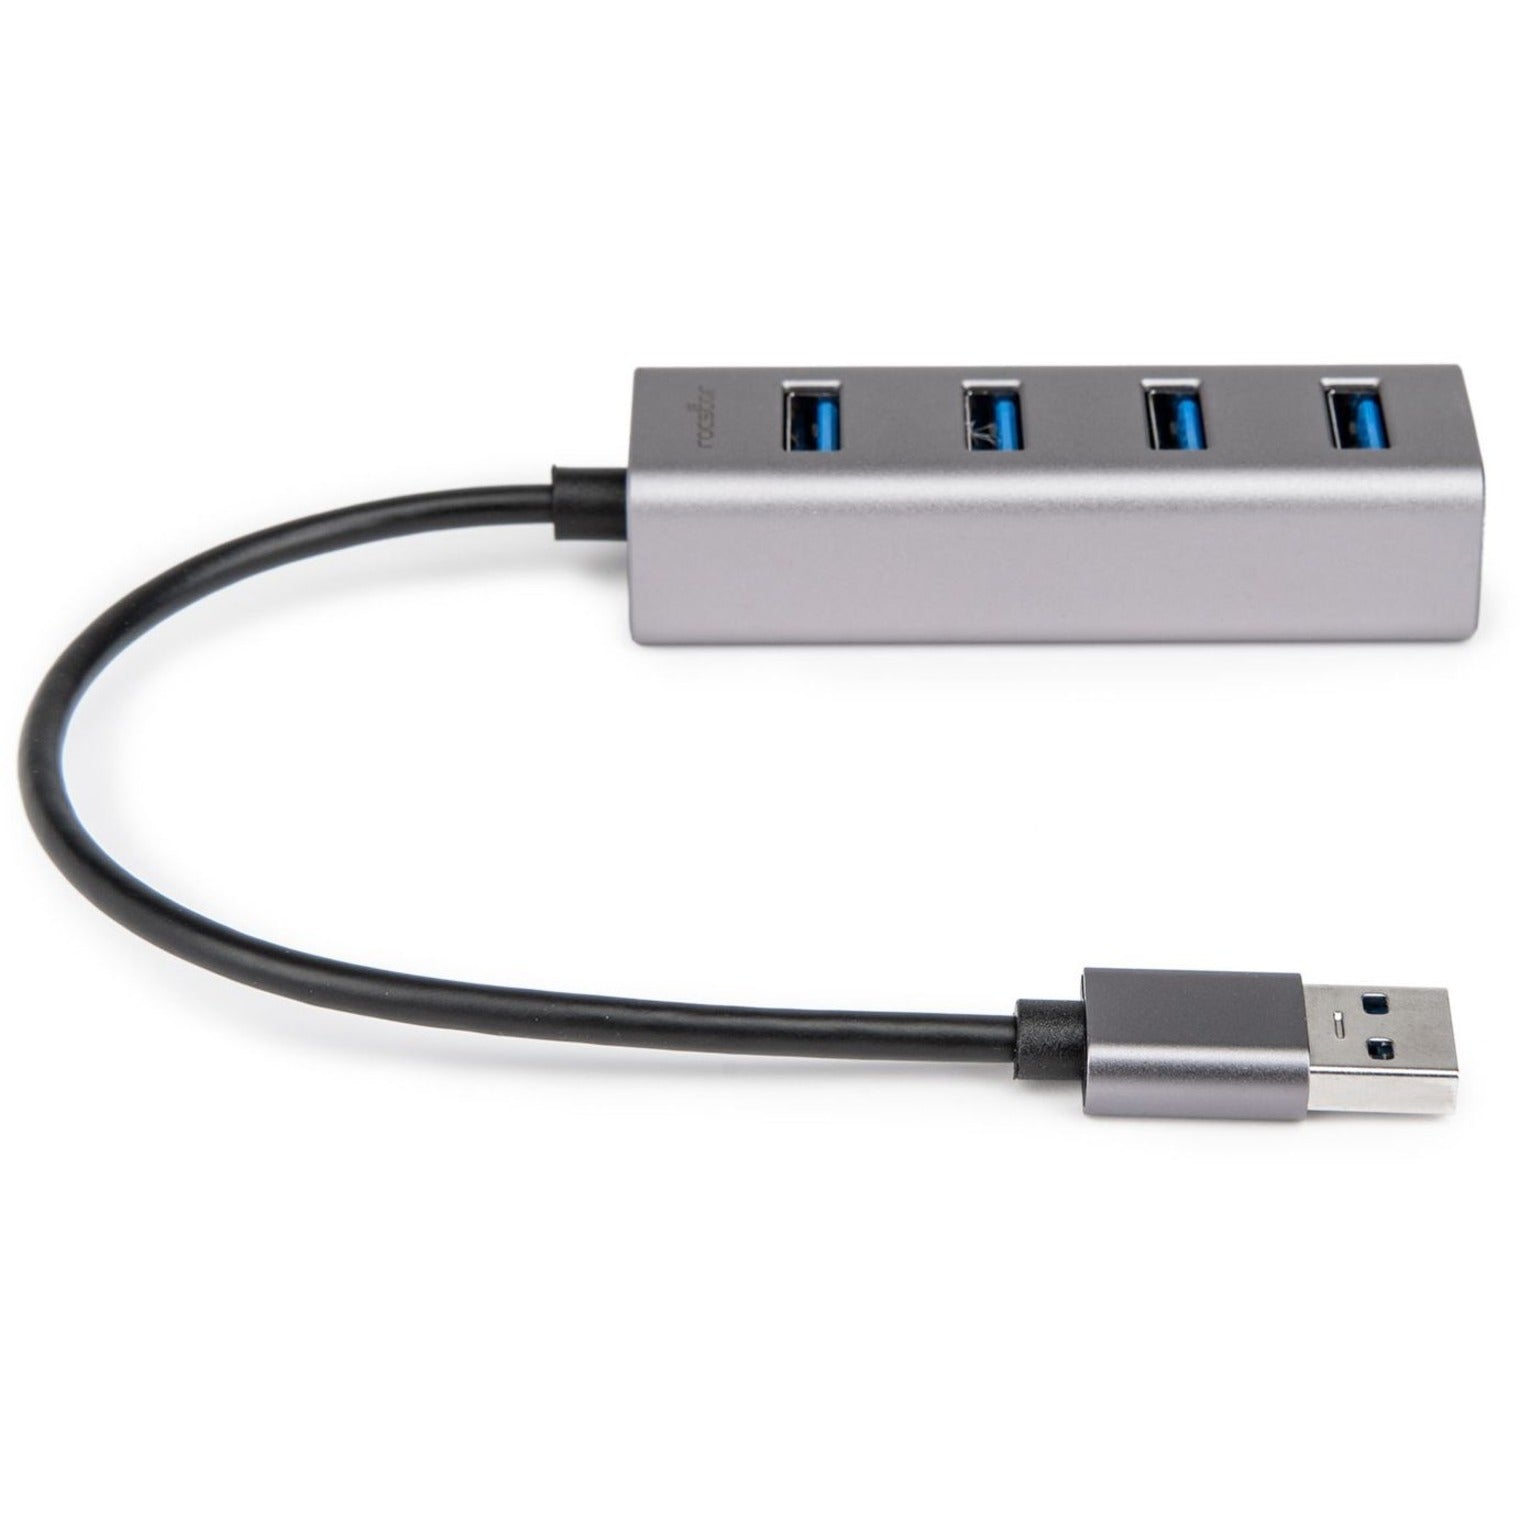 Rocstor Y10A270-A1 Portable 4 Port Hub USB-A to 4x USB-A SuperSpeed USB 3.0, 2 Year Warranty, Mac PC Compatible